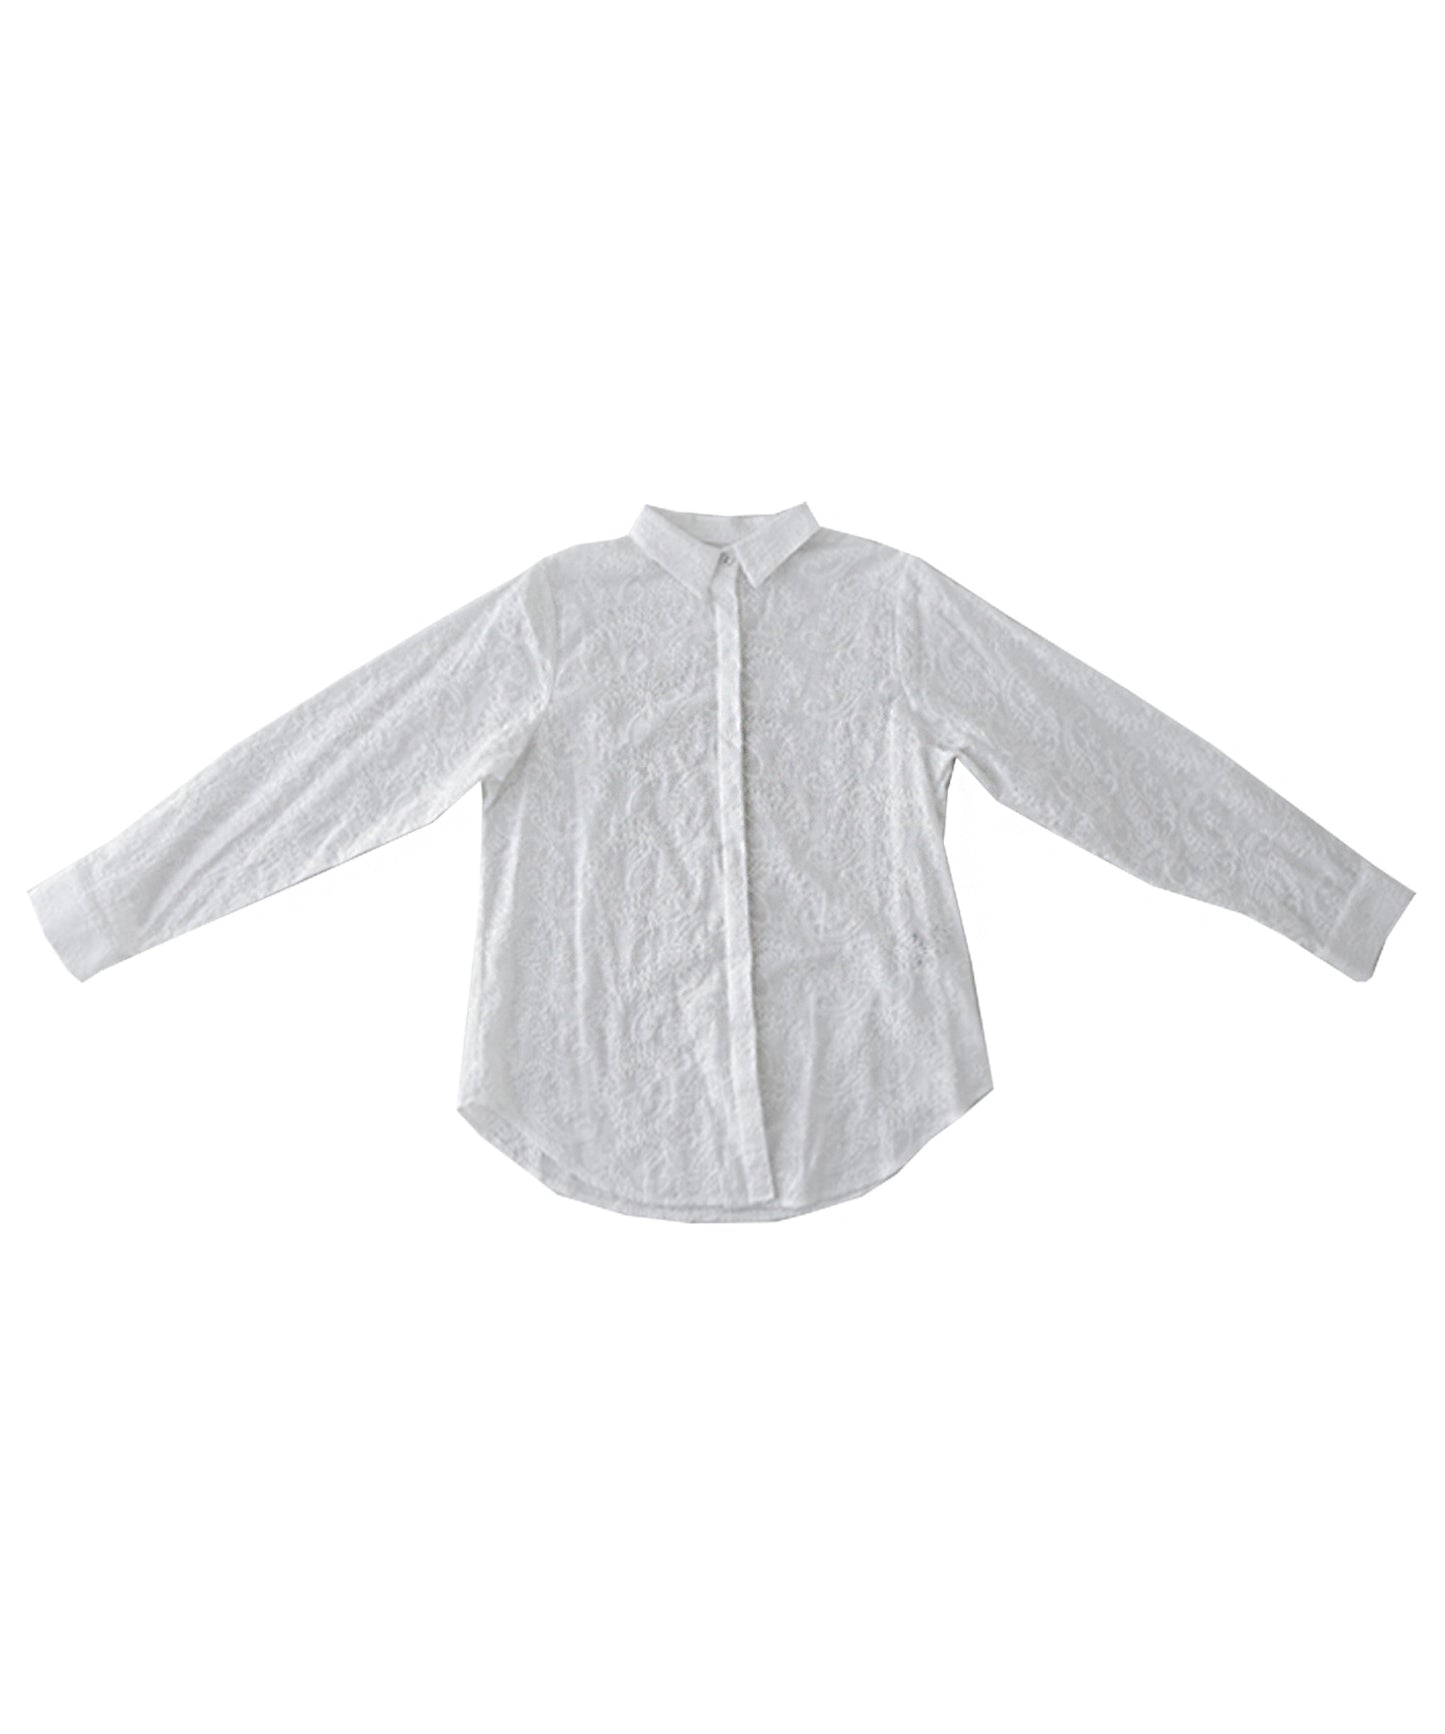 Paisley embroidery Ladies shirt Ladies Tops Long-Sleeve